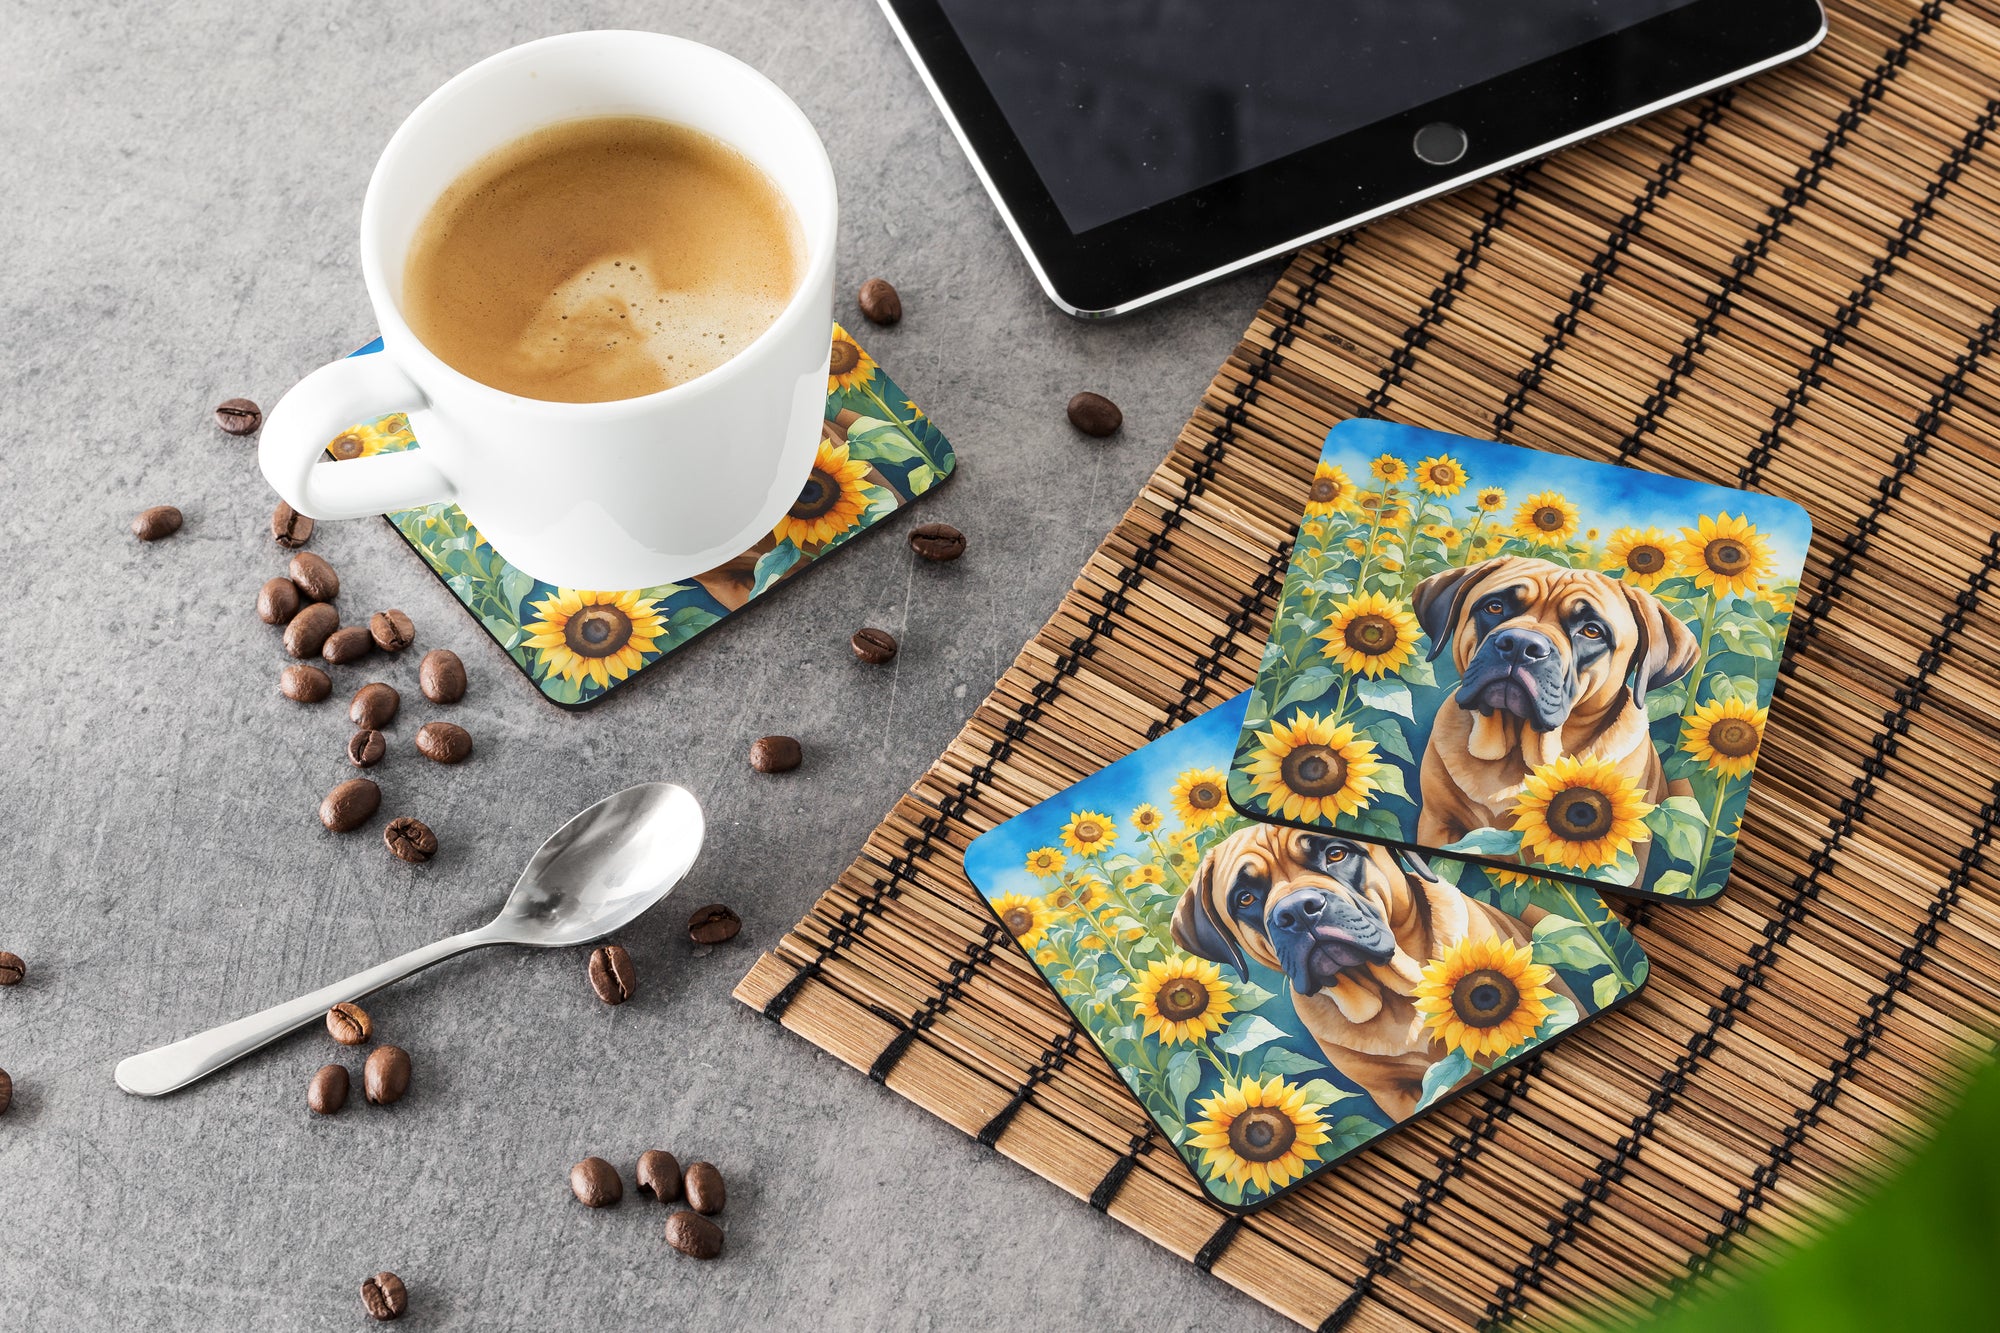 Mastiff in Sunflowers Foam Coasters